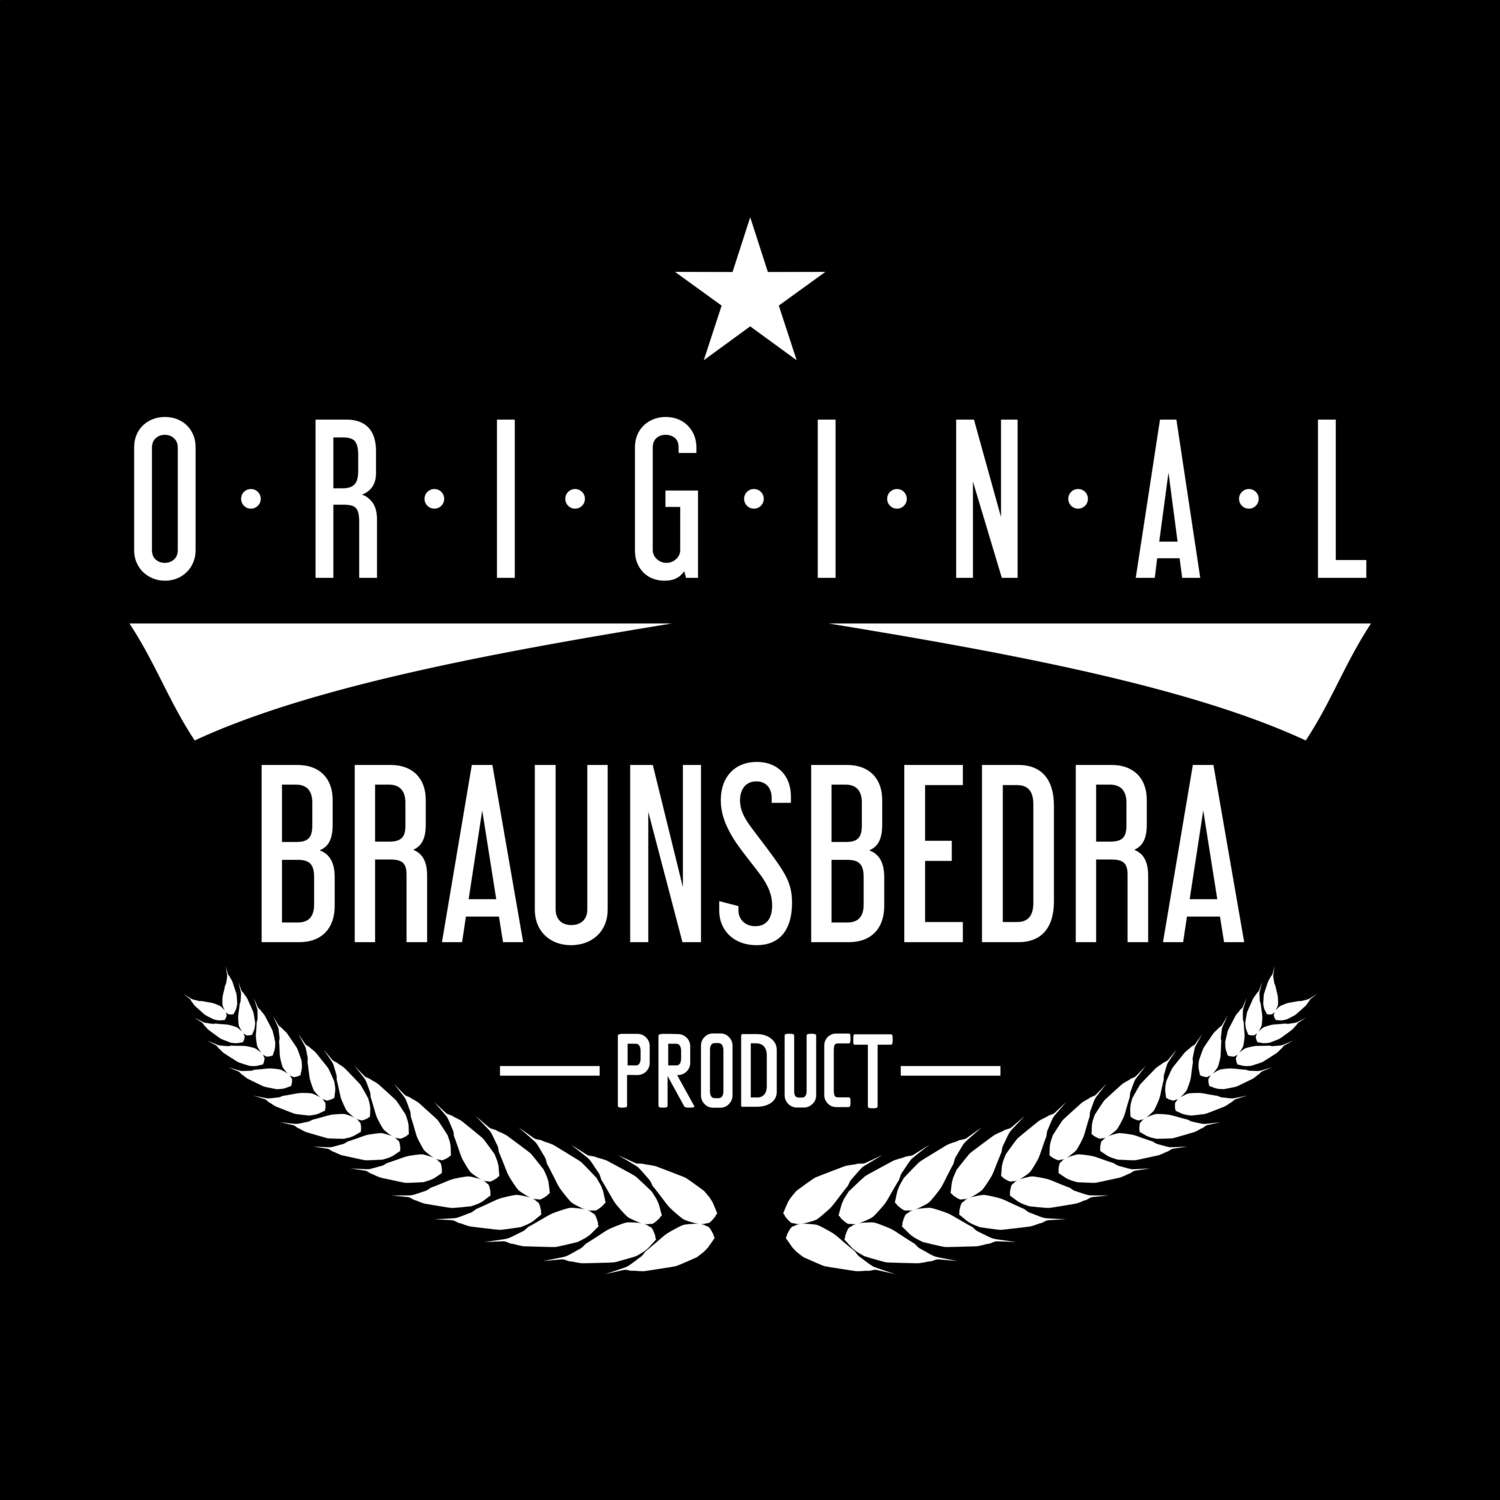 Braunsbedra T-Shirt »Original Product«